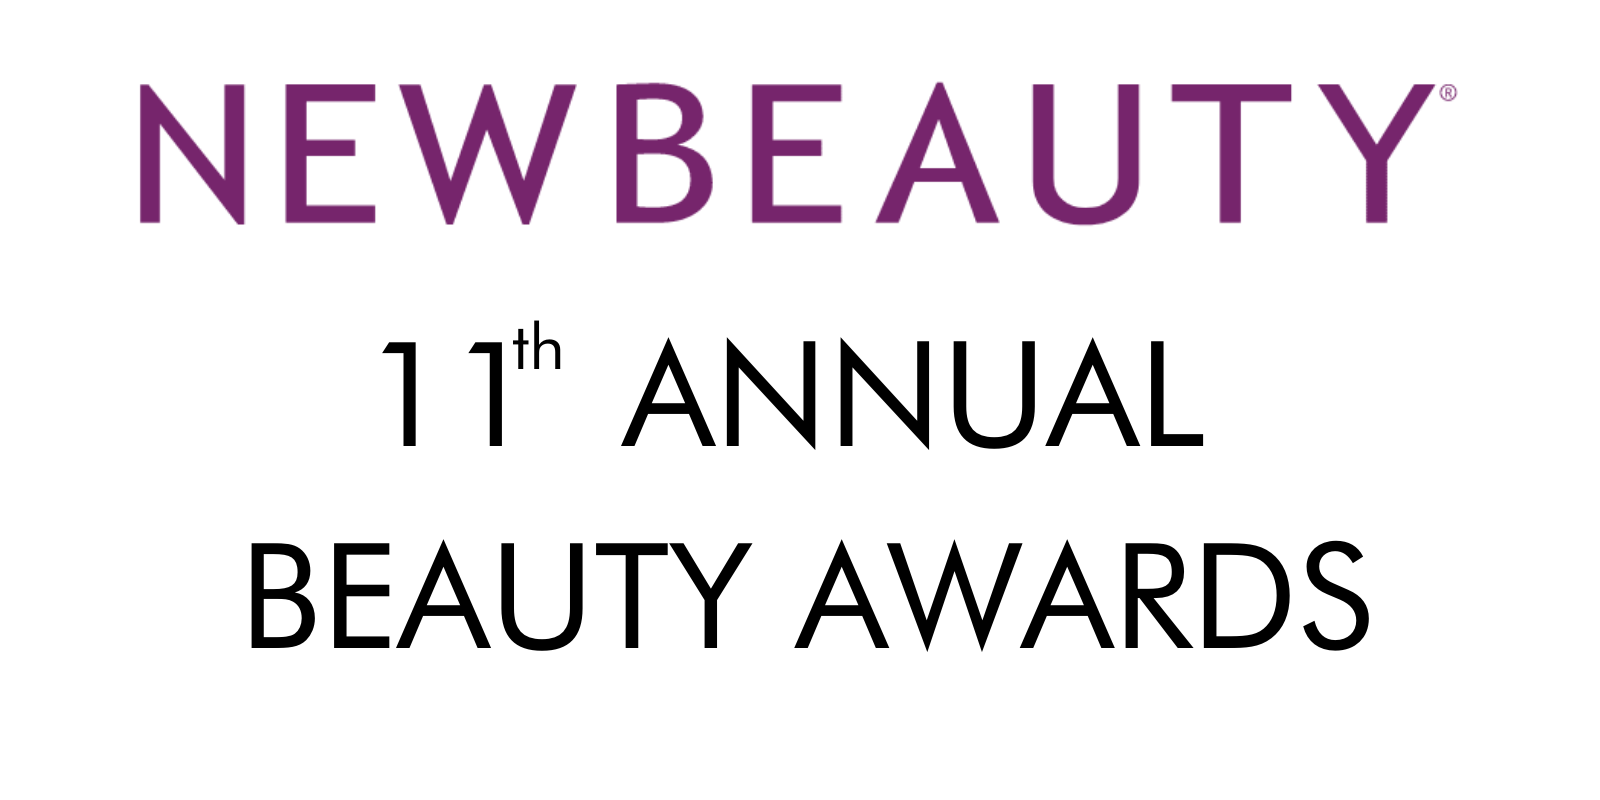 NEW BEAUTY 11th Annual Beauty Awards